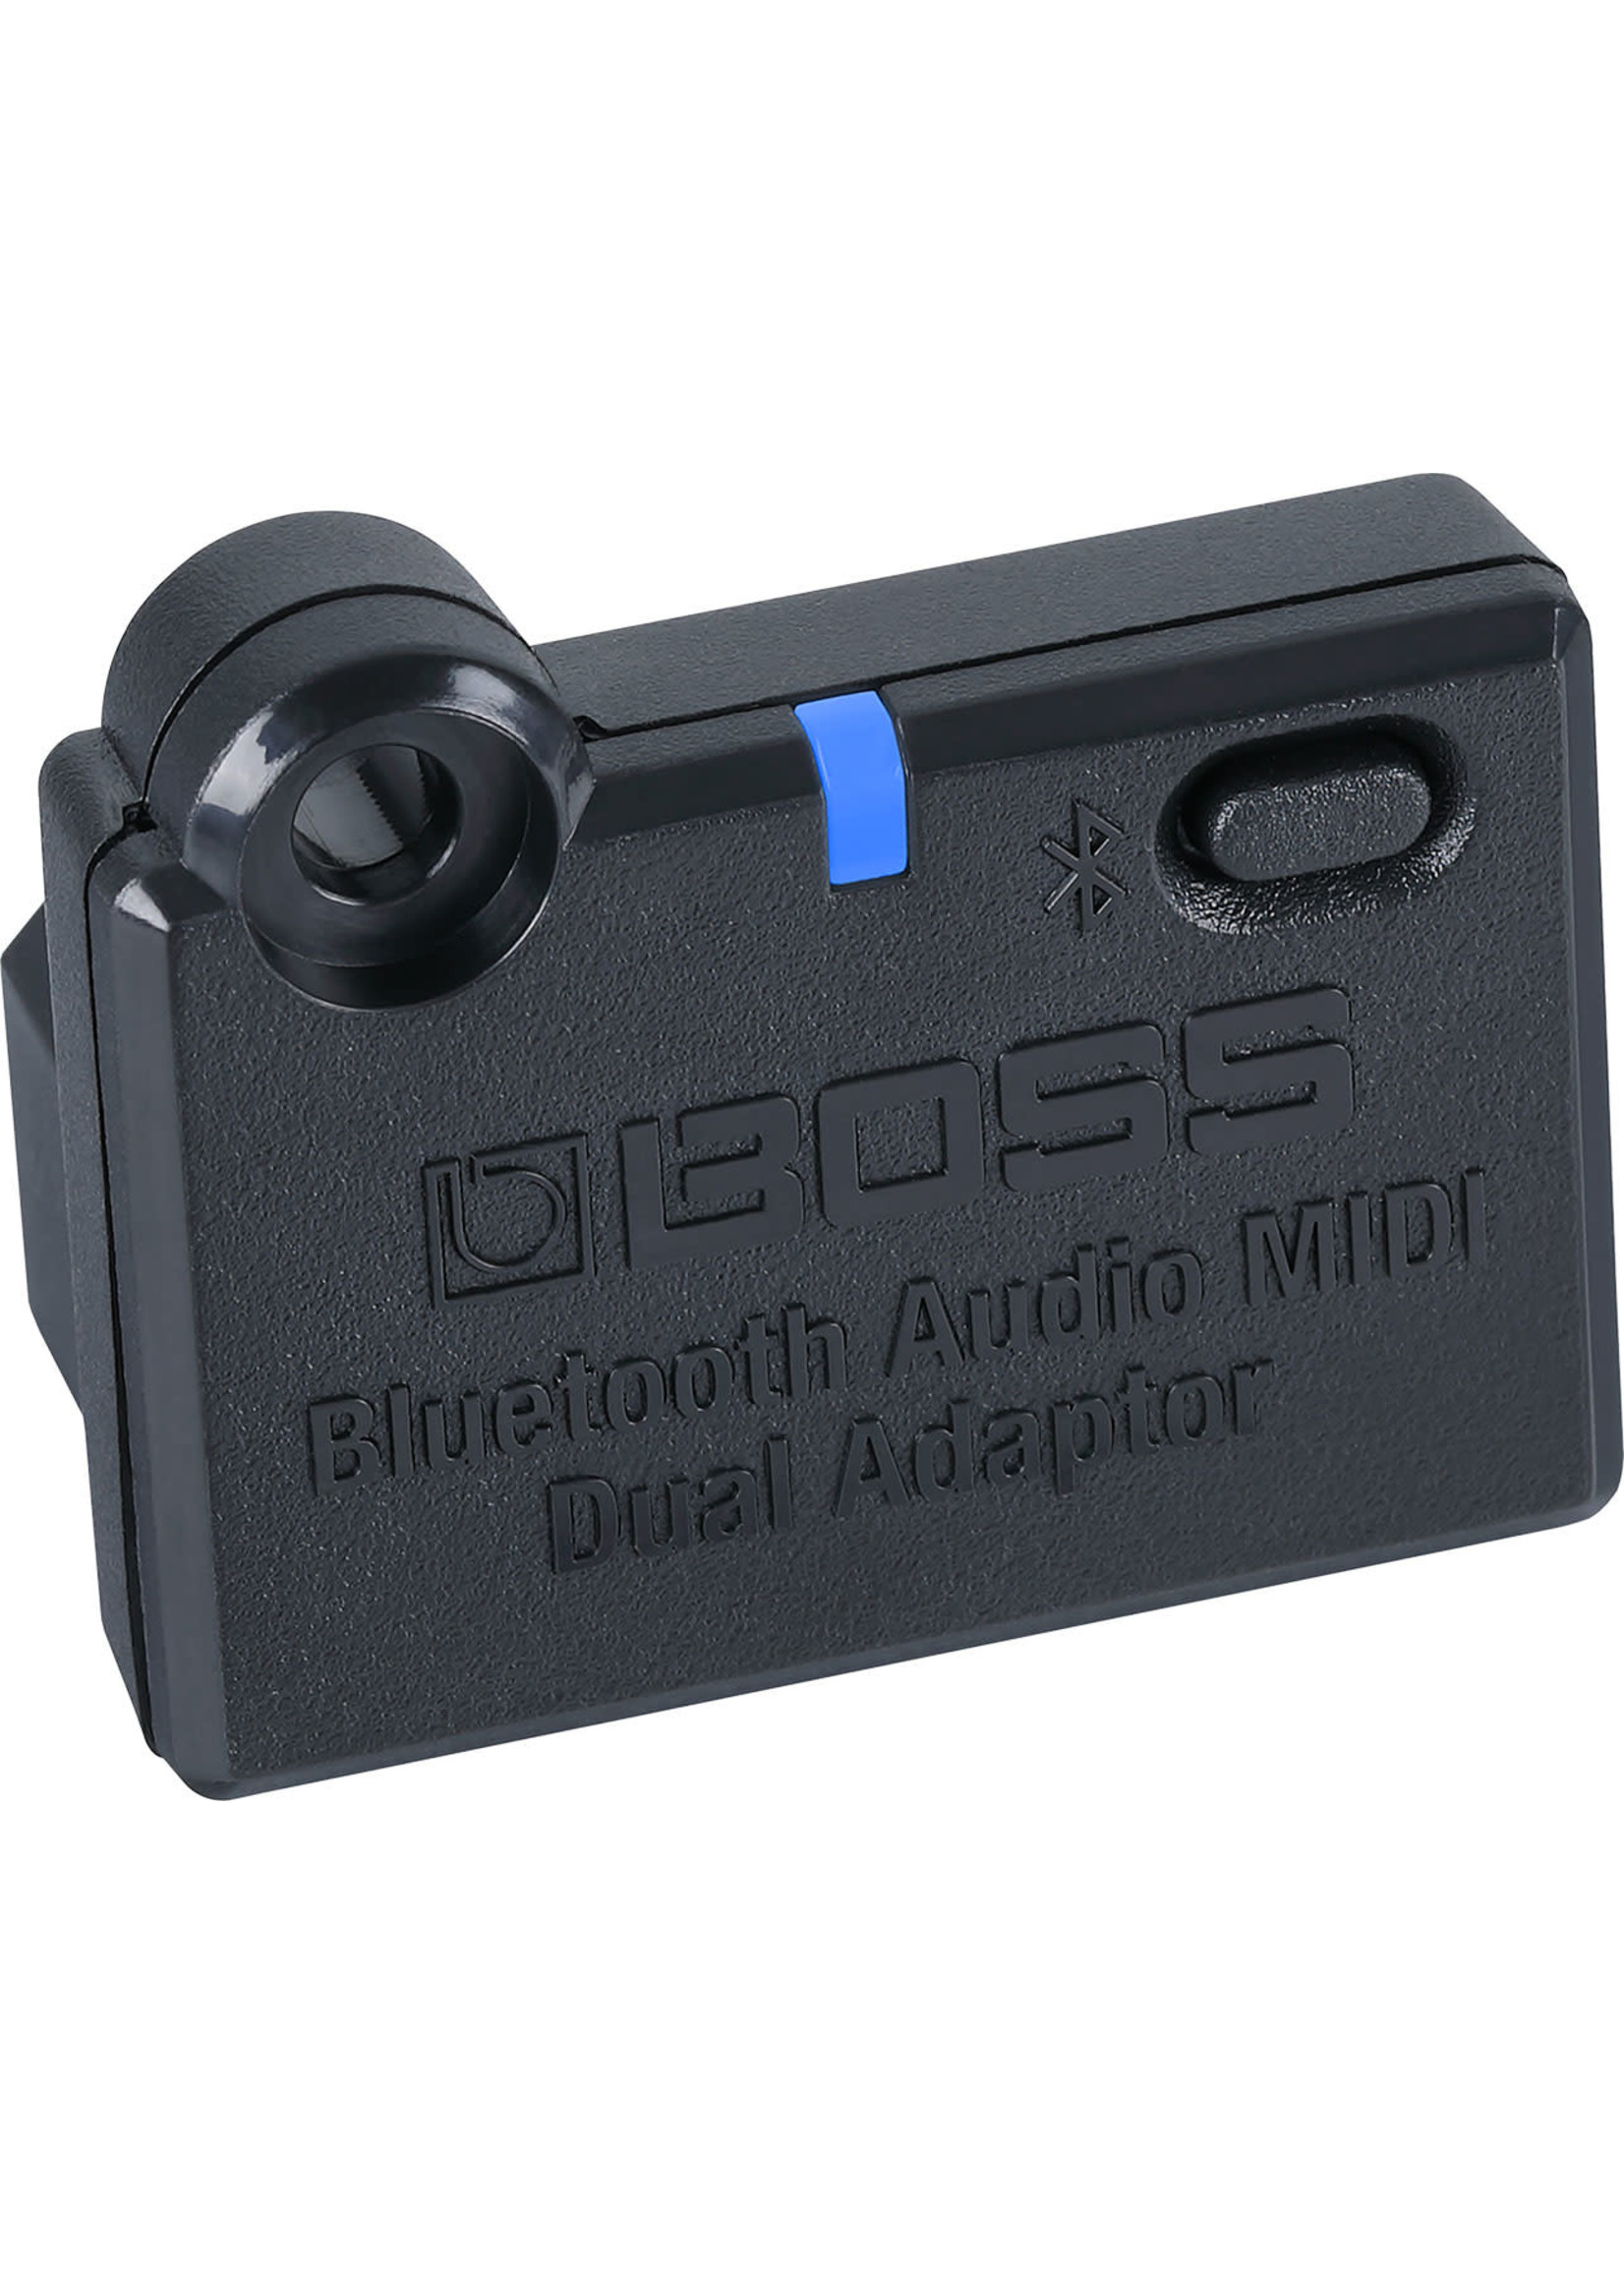 Boss Boss Bluetooth Audio MIDI Dual Adaptor